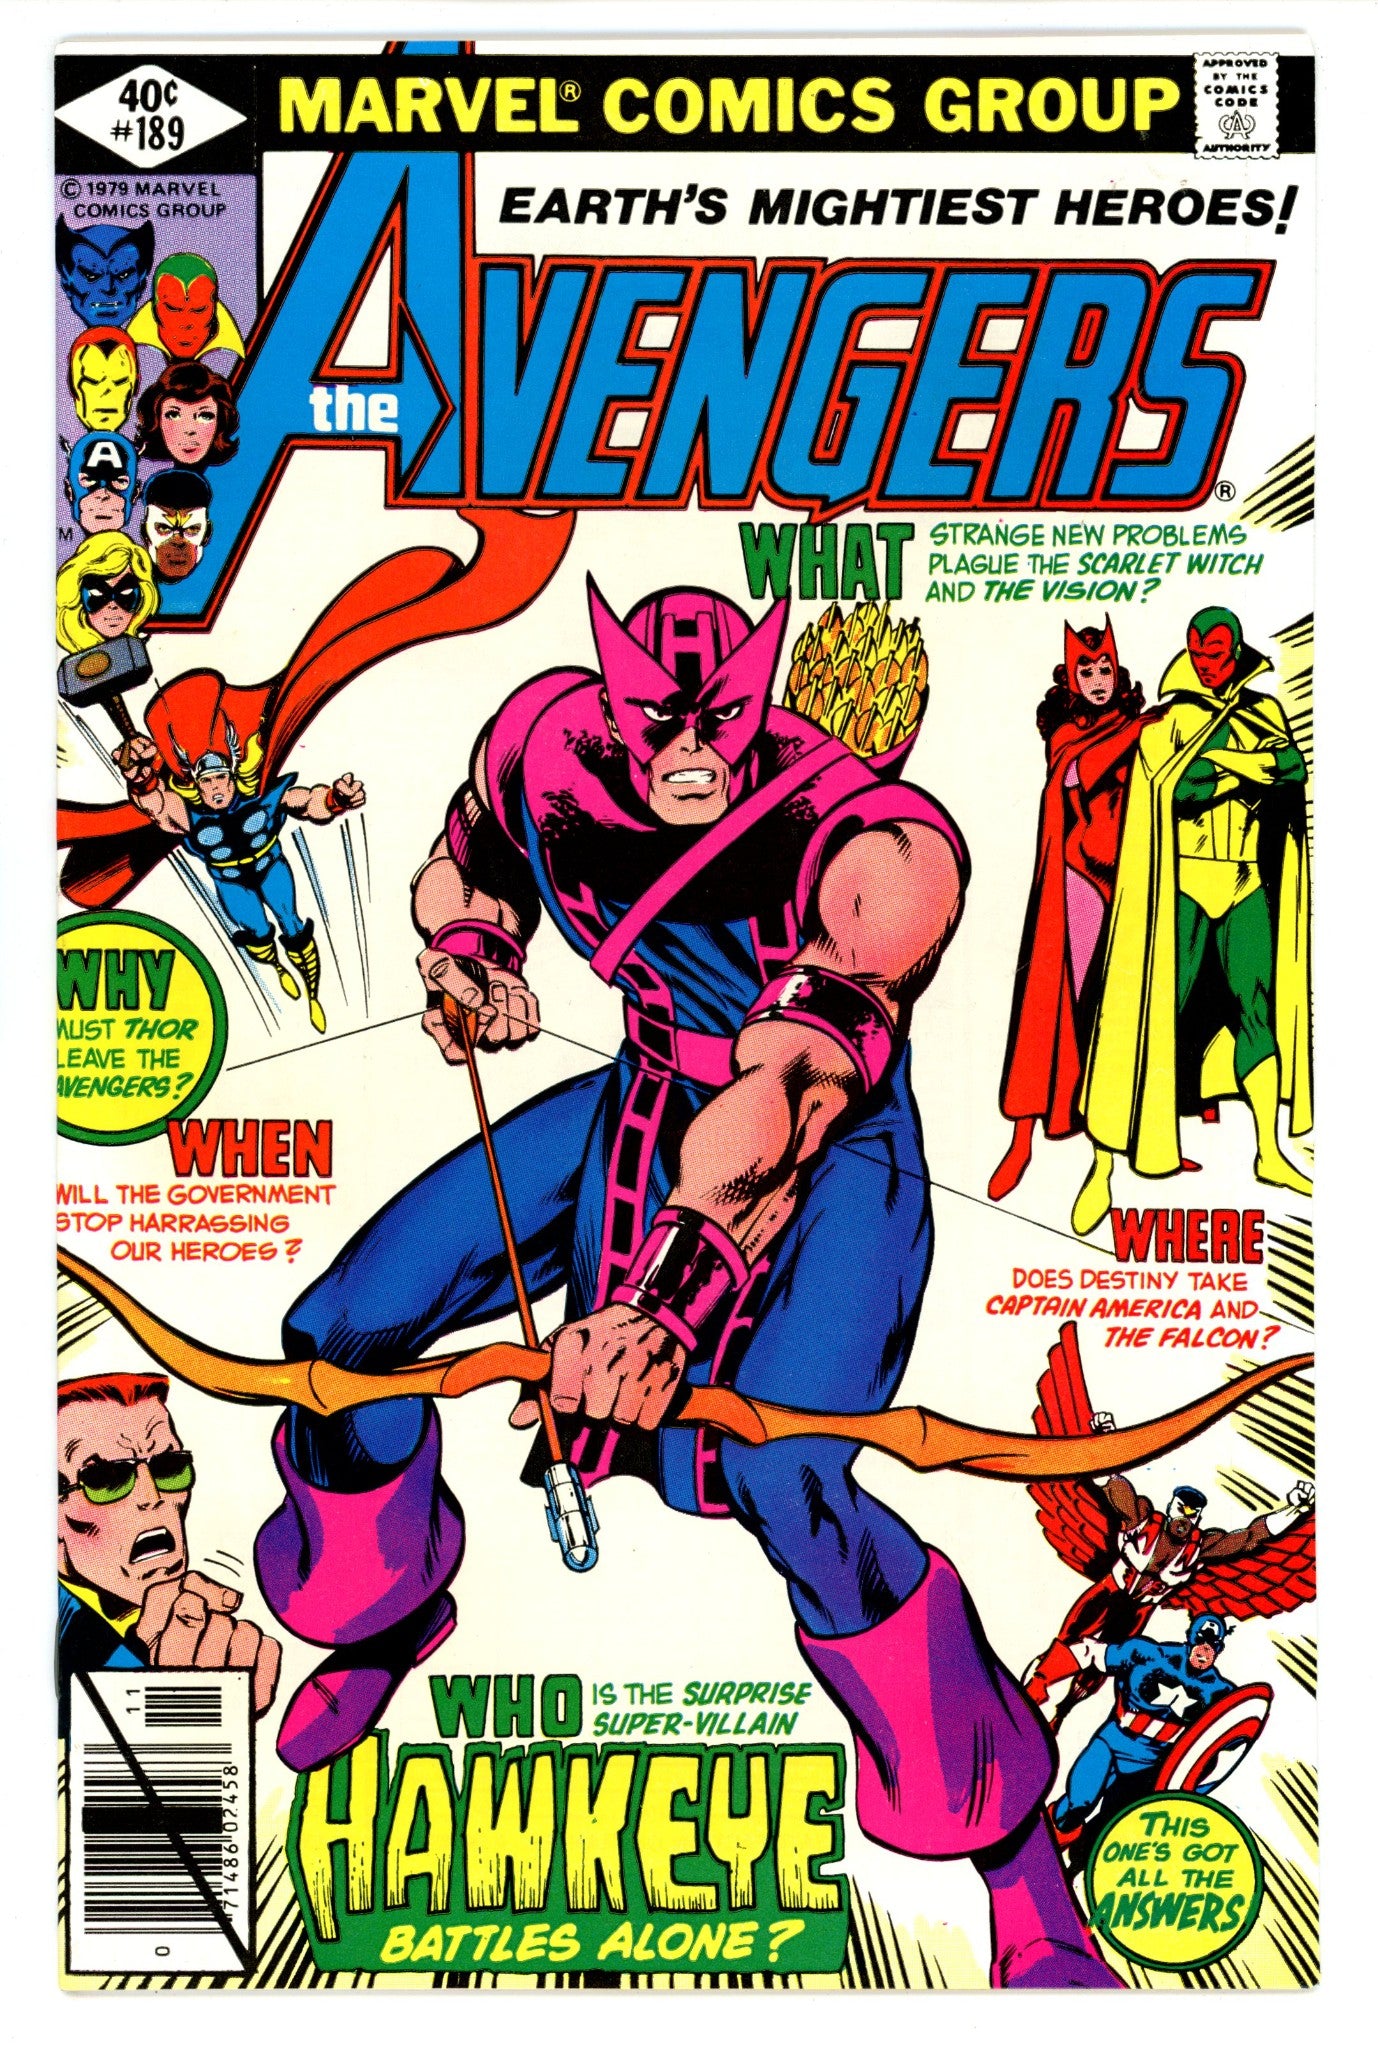 The Avengers Vol 1 189 VF/NM (9.0) (1979) 